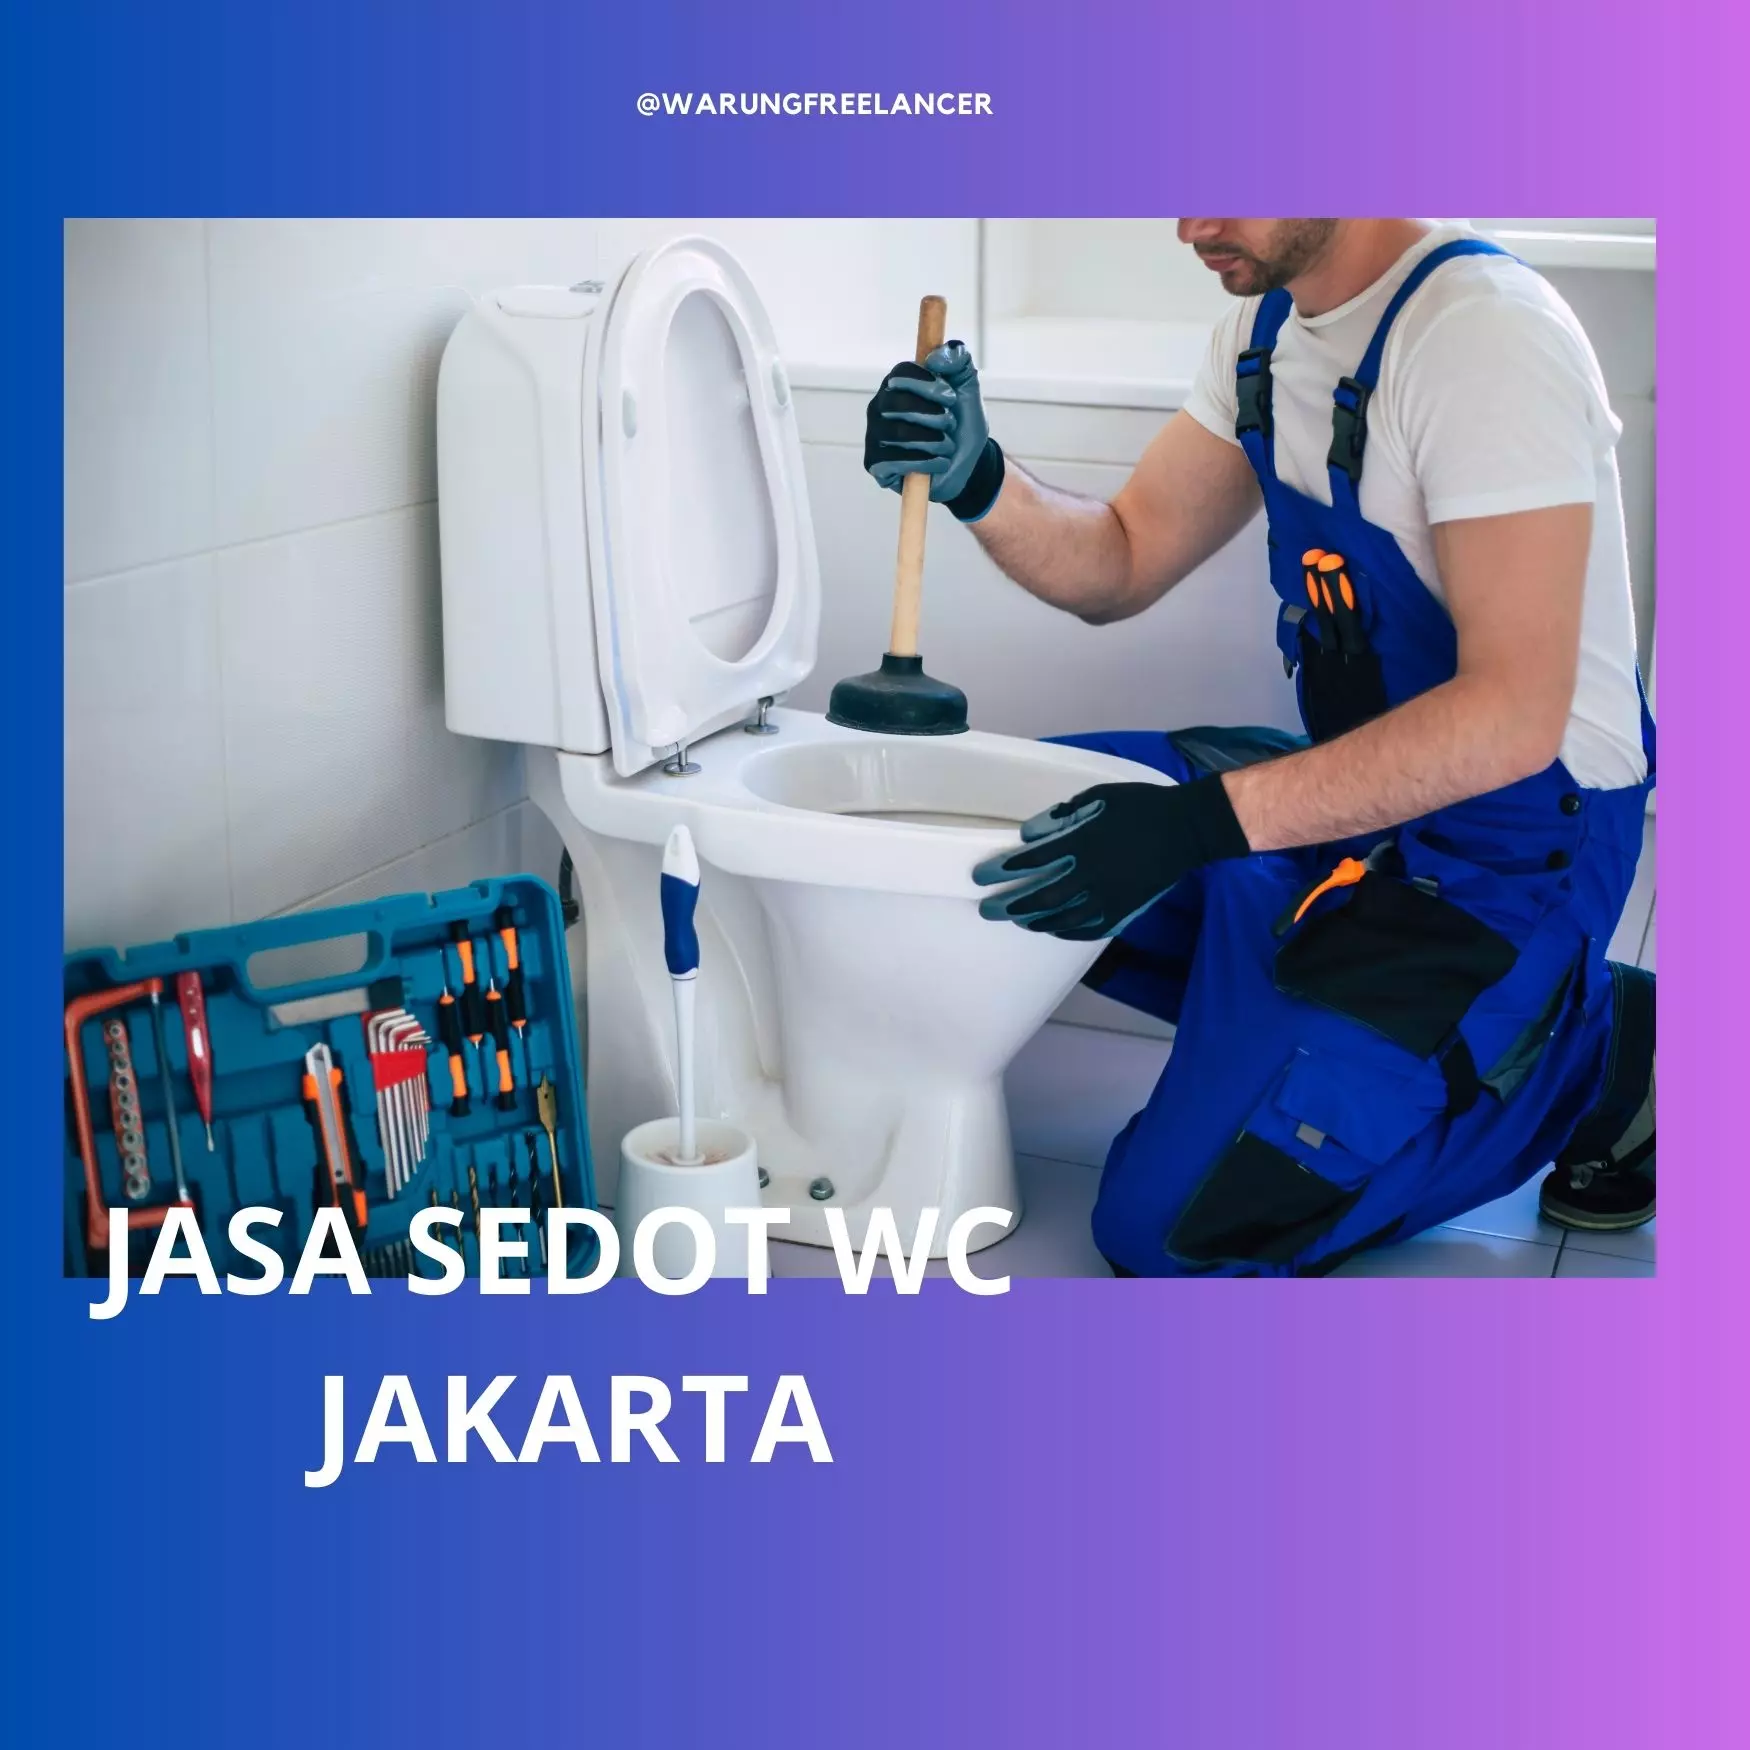 Jasa Sedot WC Jakarta